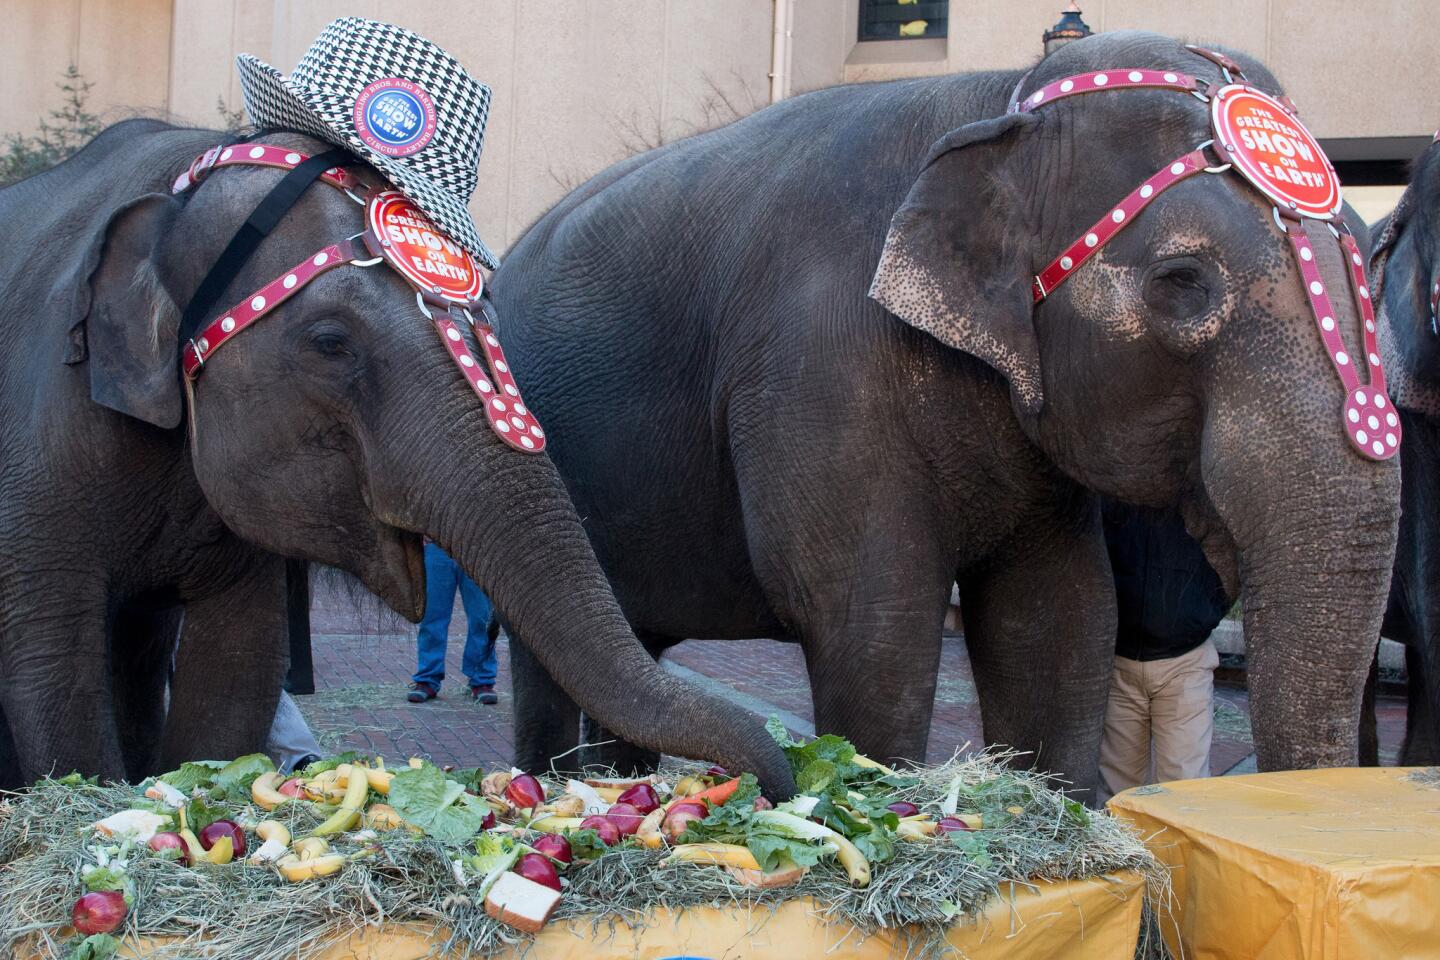 Circus elephants enjoy their meal during Ringling Bros. "Elephant Brunch" at Birmingham-Jefferson Civic Center on January 21, 2015 in Birmingham, Alabama.